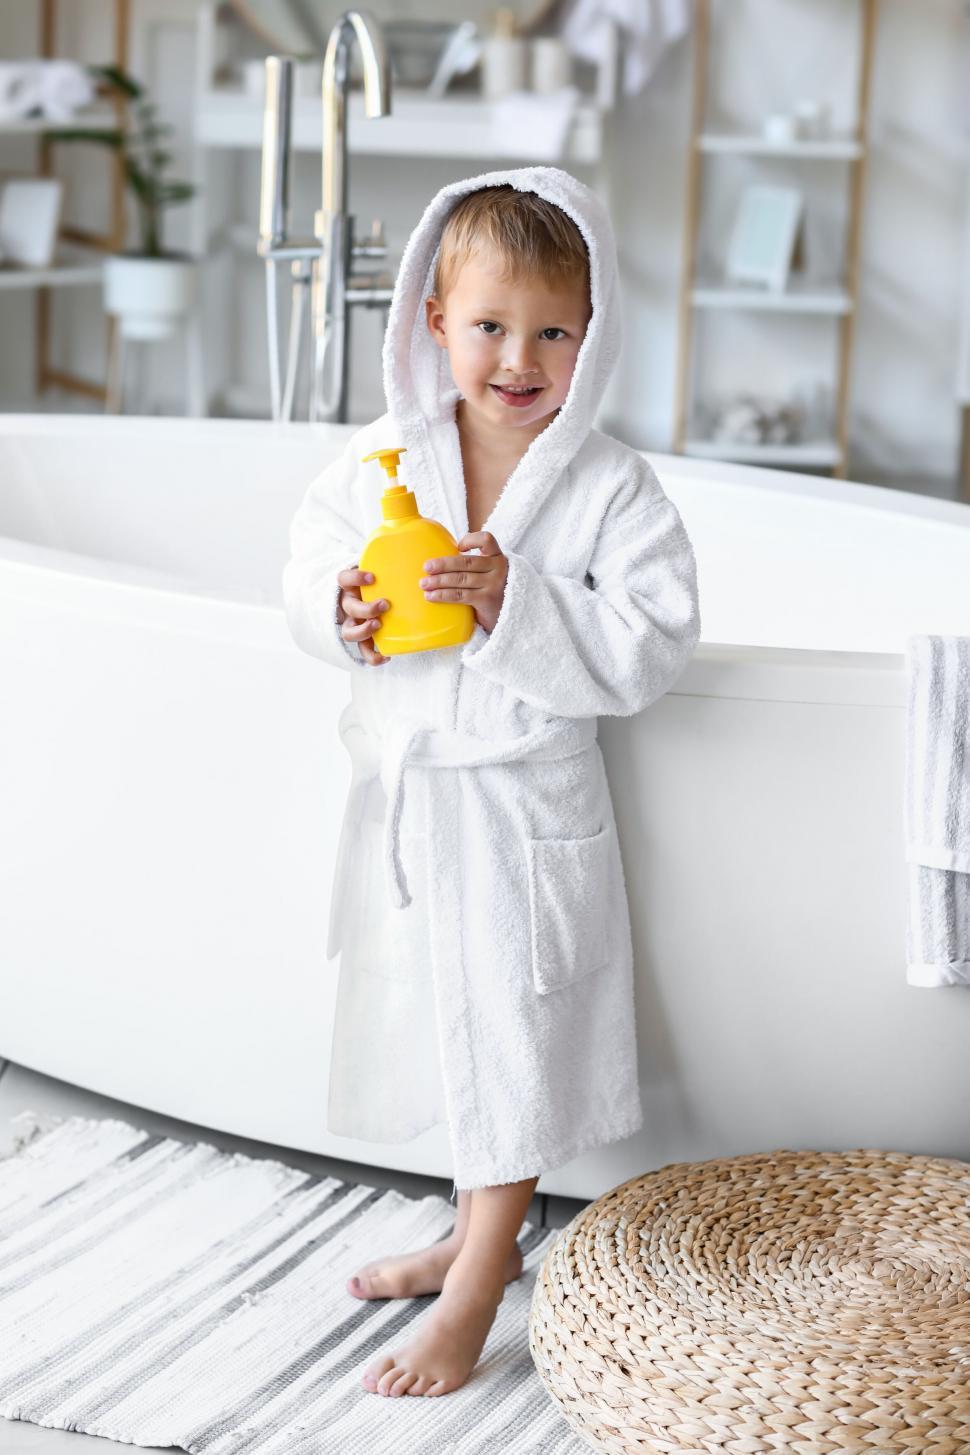 Free Image of Boy in bathrobe holding yellow bottle 